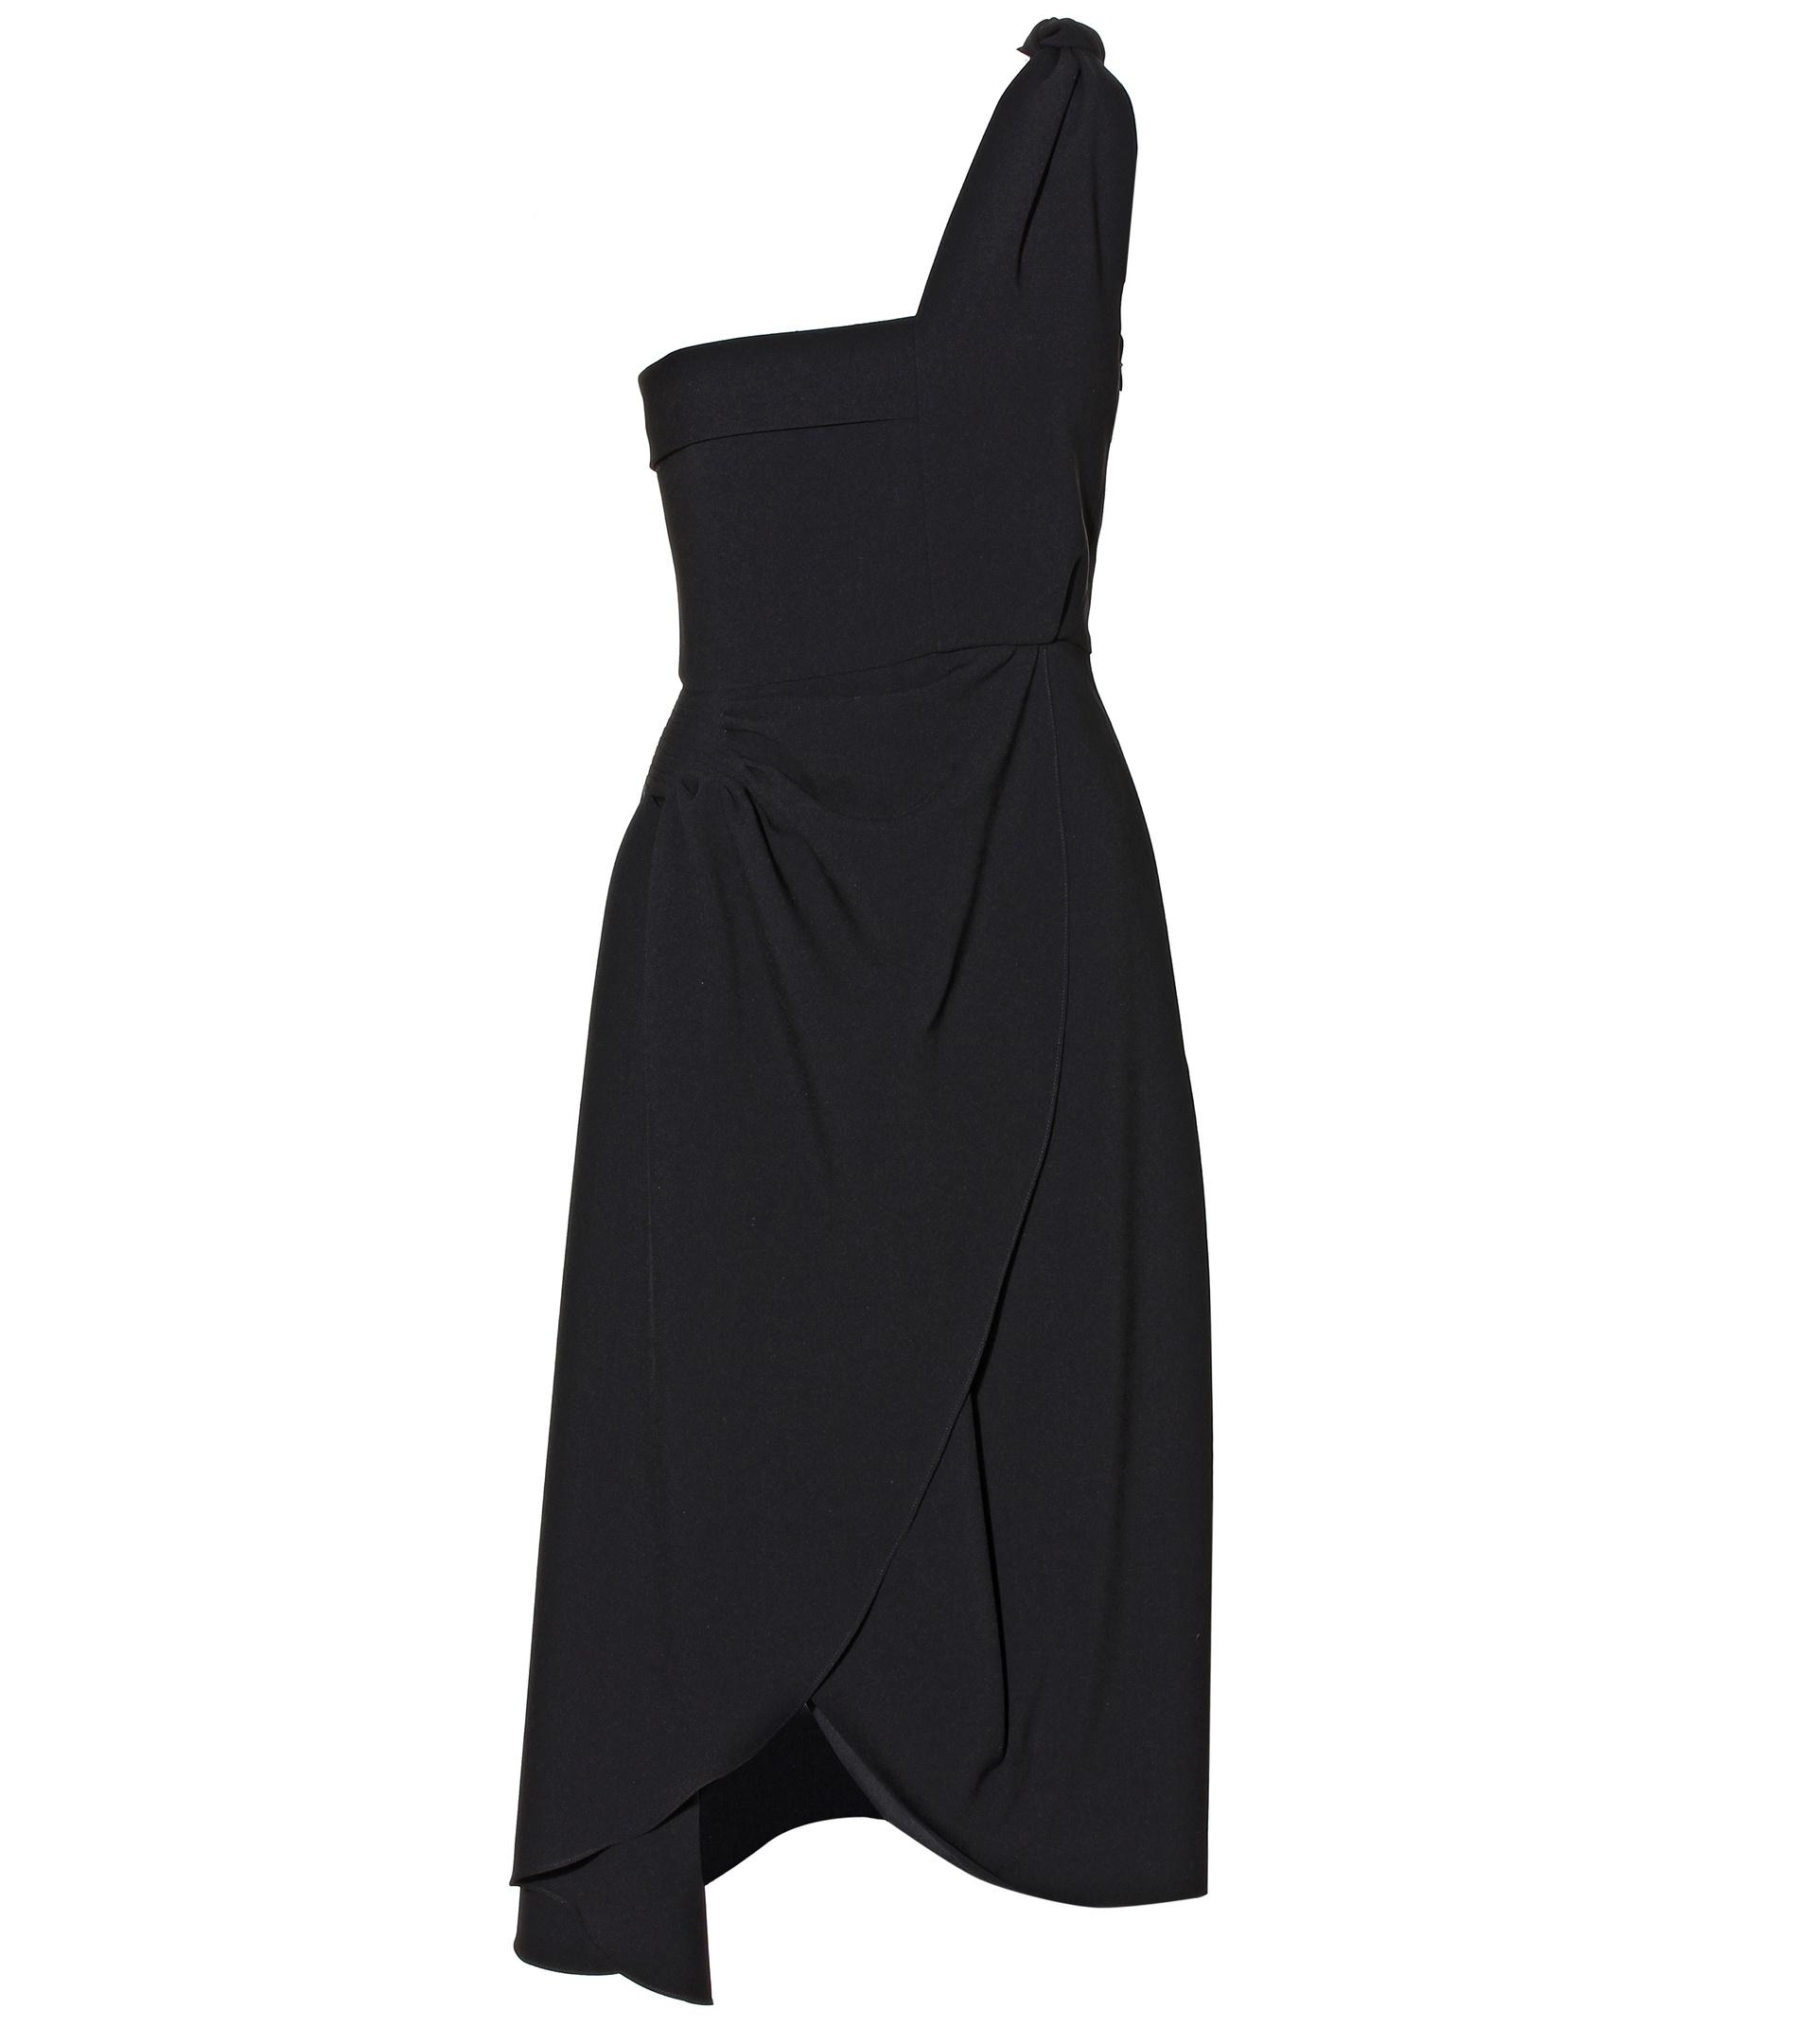 JW Anderson Asymmetrical One-shoulder Crêpe Dress in Black - Lyst